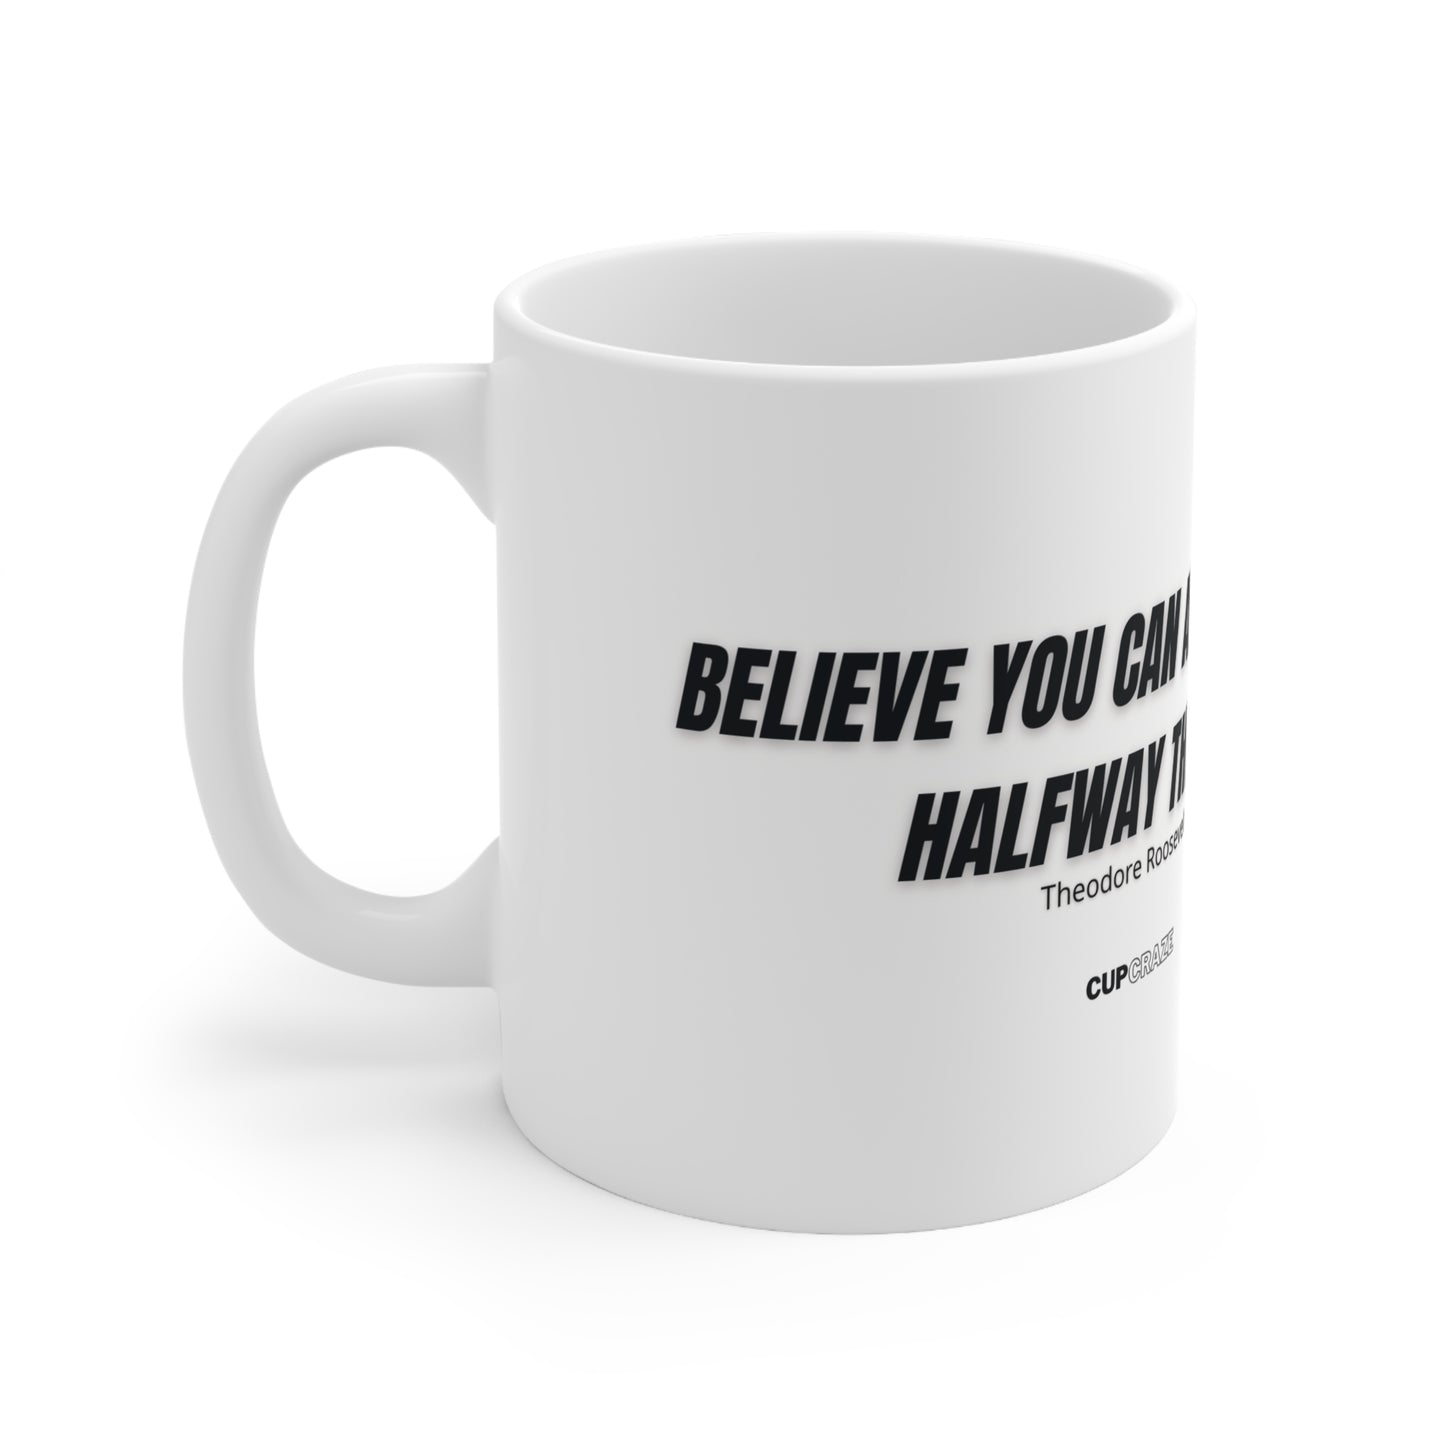 Believe you can - Stoic Ceramic Mug 11oz